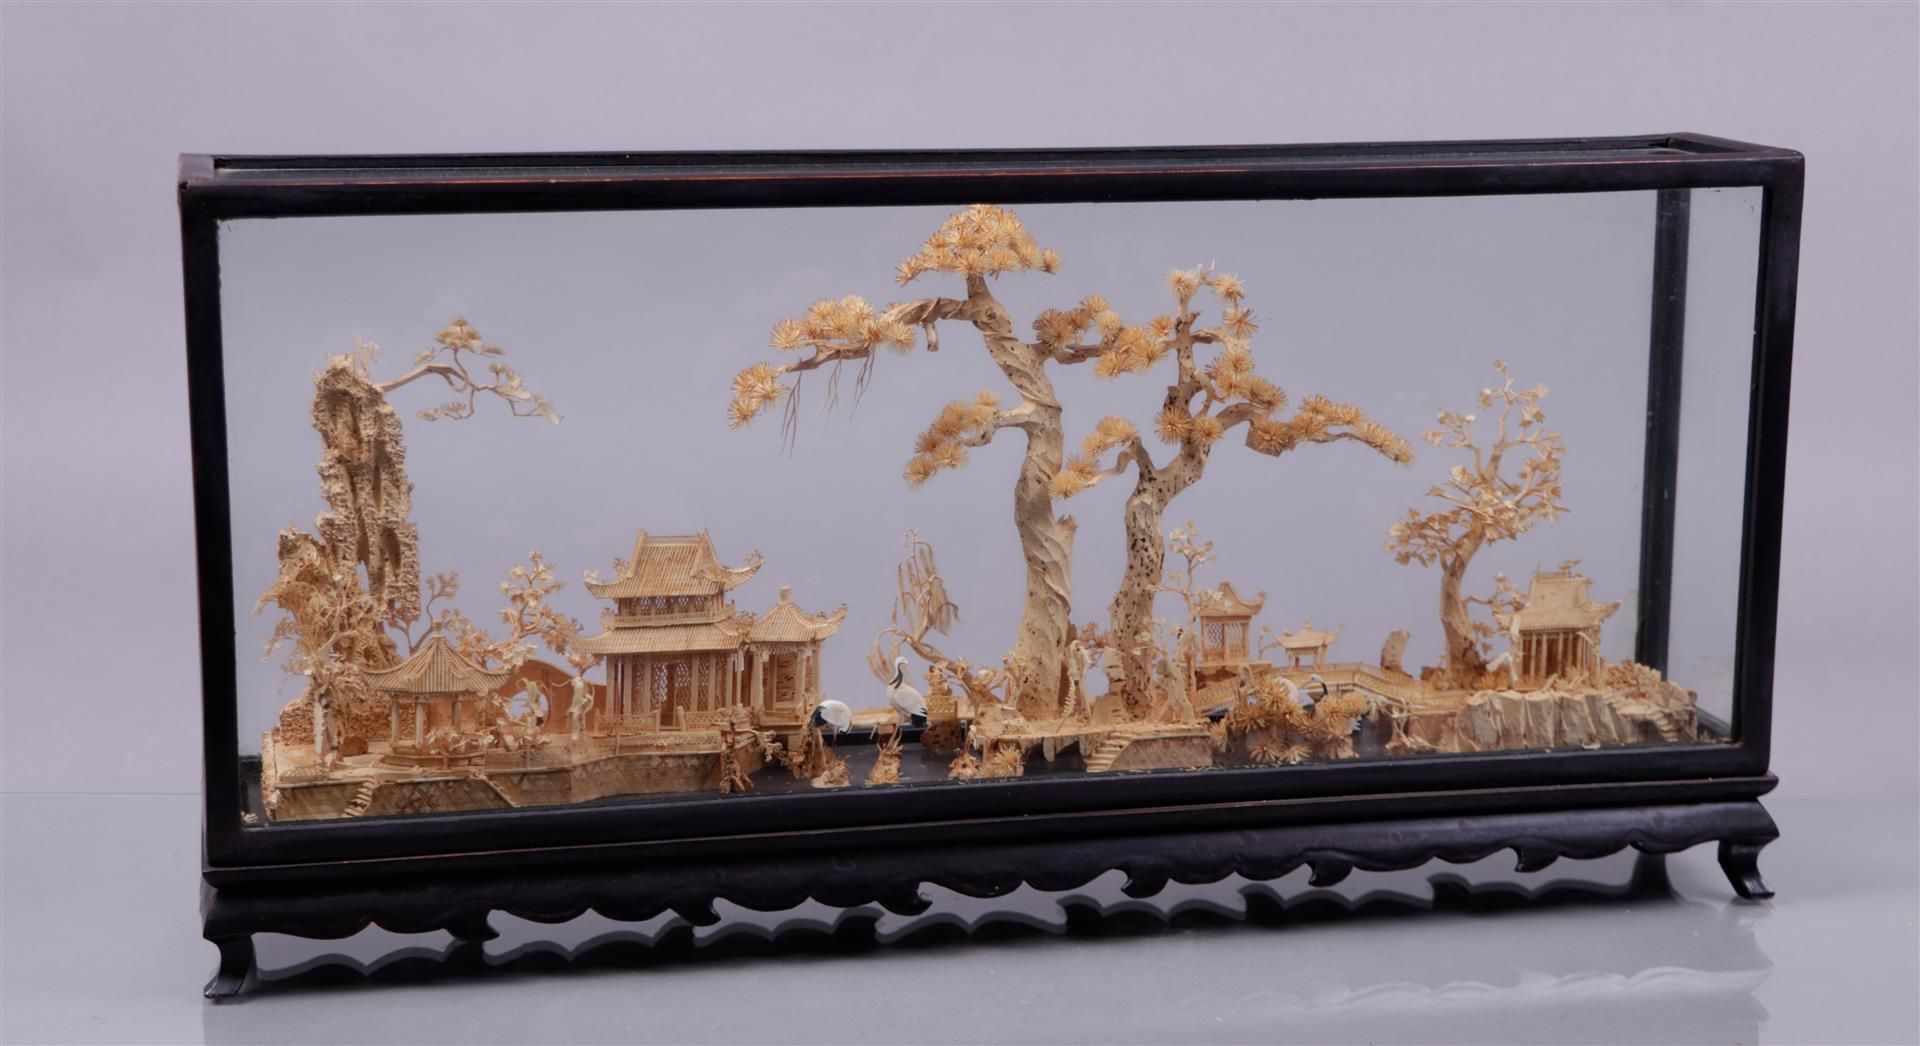 A Japanese diorama made of cork depicting court gardens.
29 x 11 x 59 cm. - Bild 2 aus 2